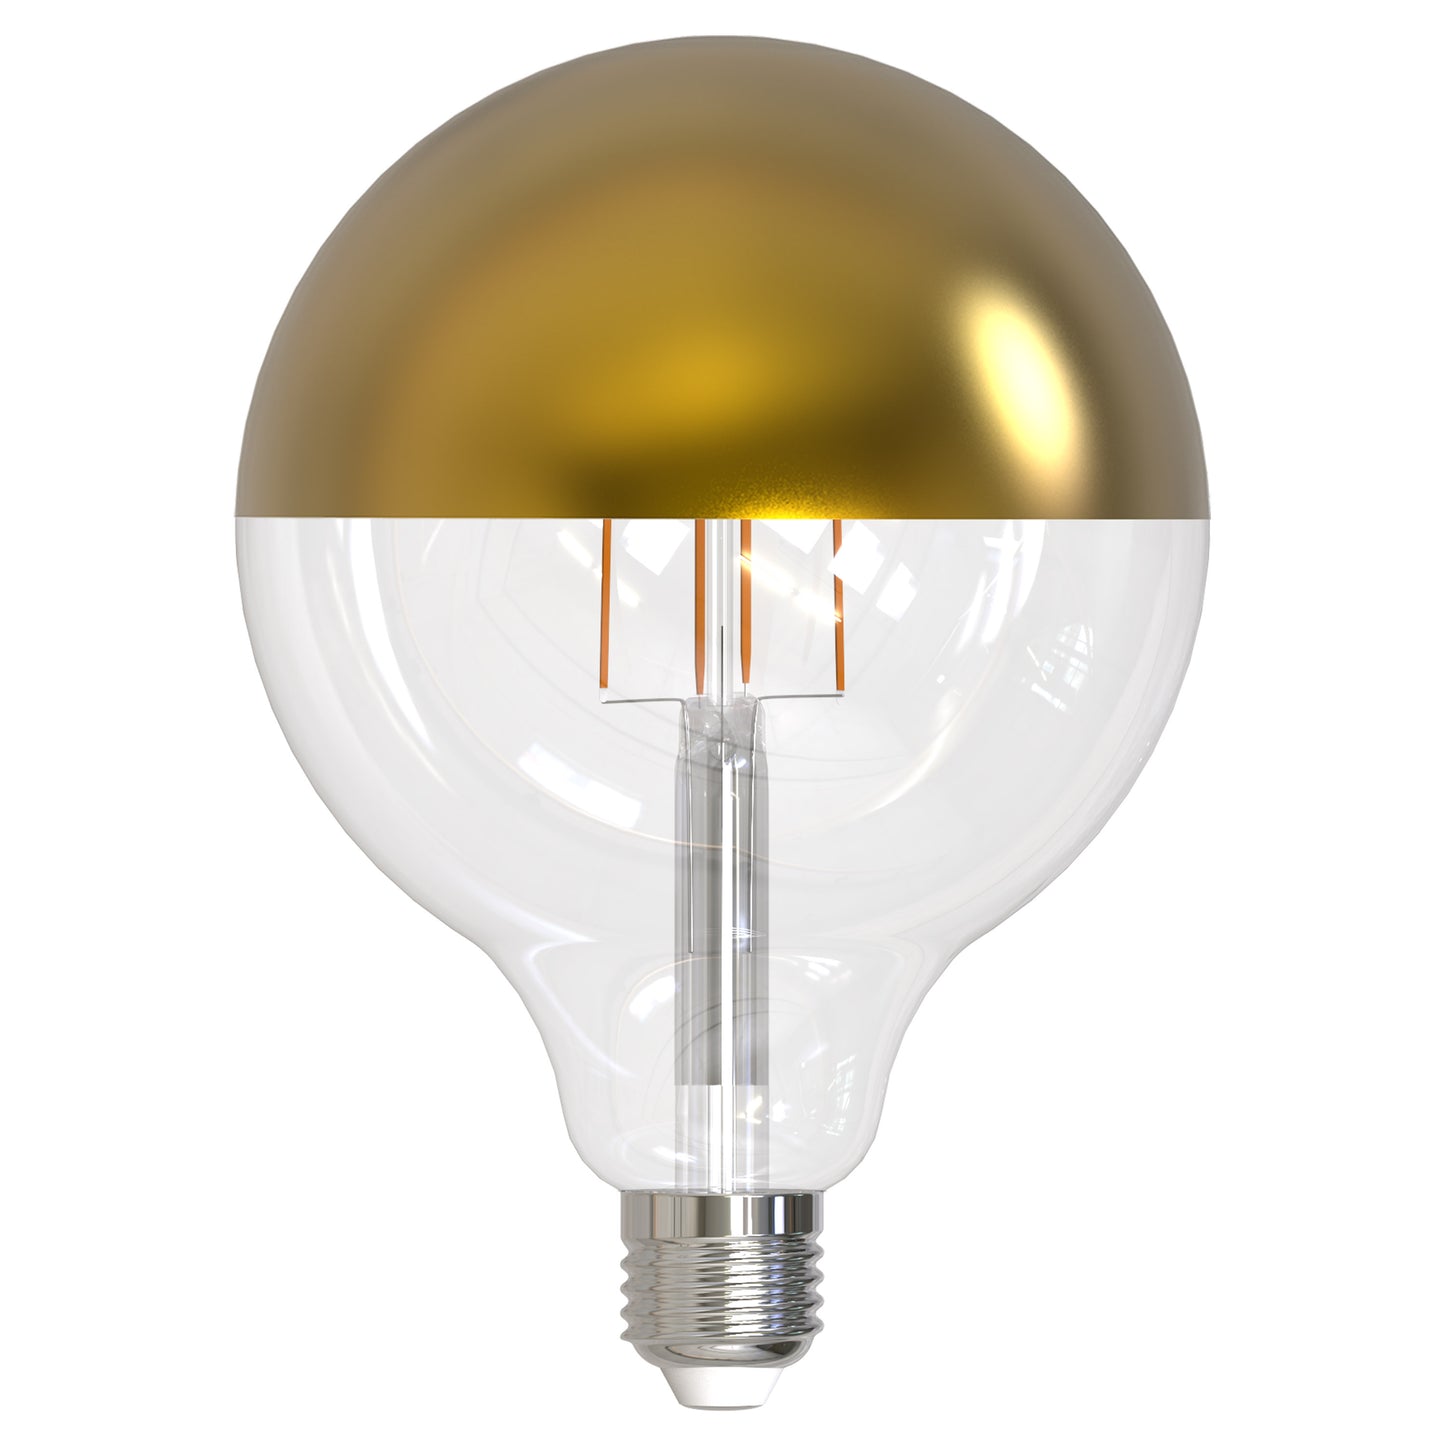 Bulbrite LED Filament 6 Watt Dimmable G40 Light Bulbs with a Half Gold Finish and Medium (E26) Base - 2700K (Warm White Light), 500 Lumens